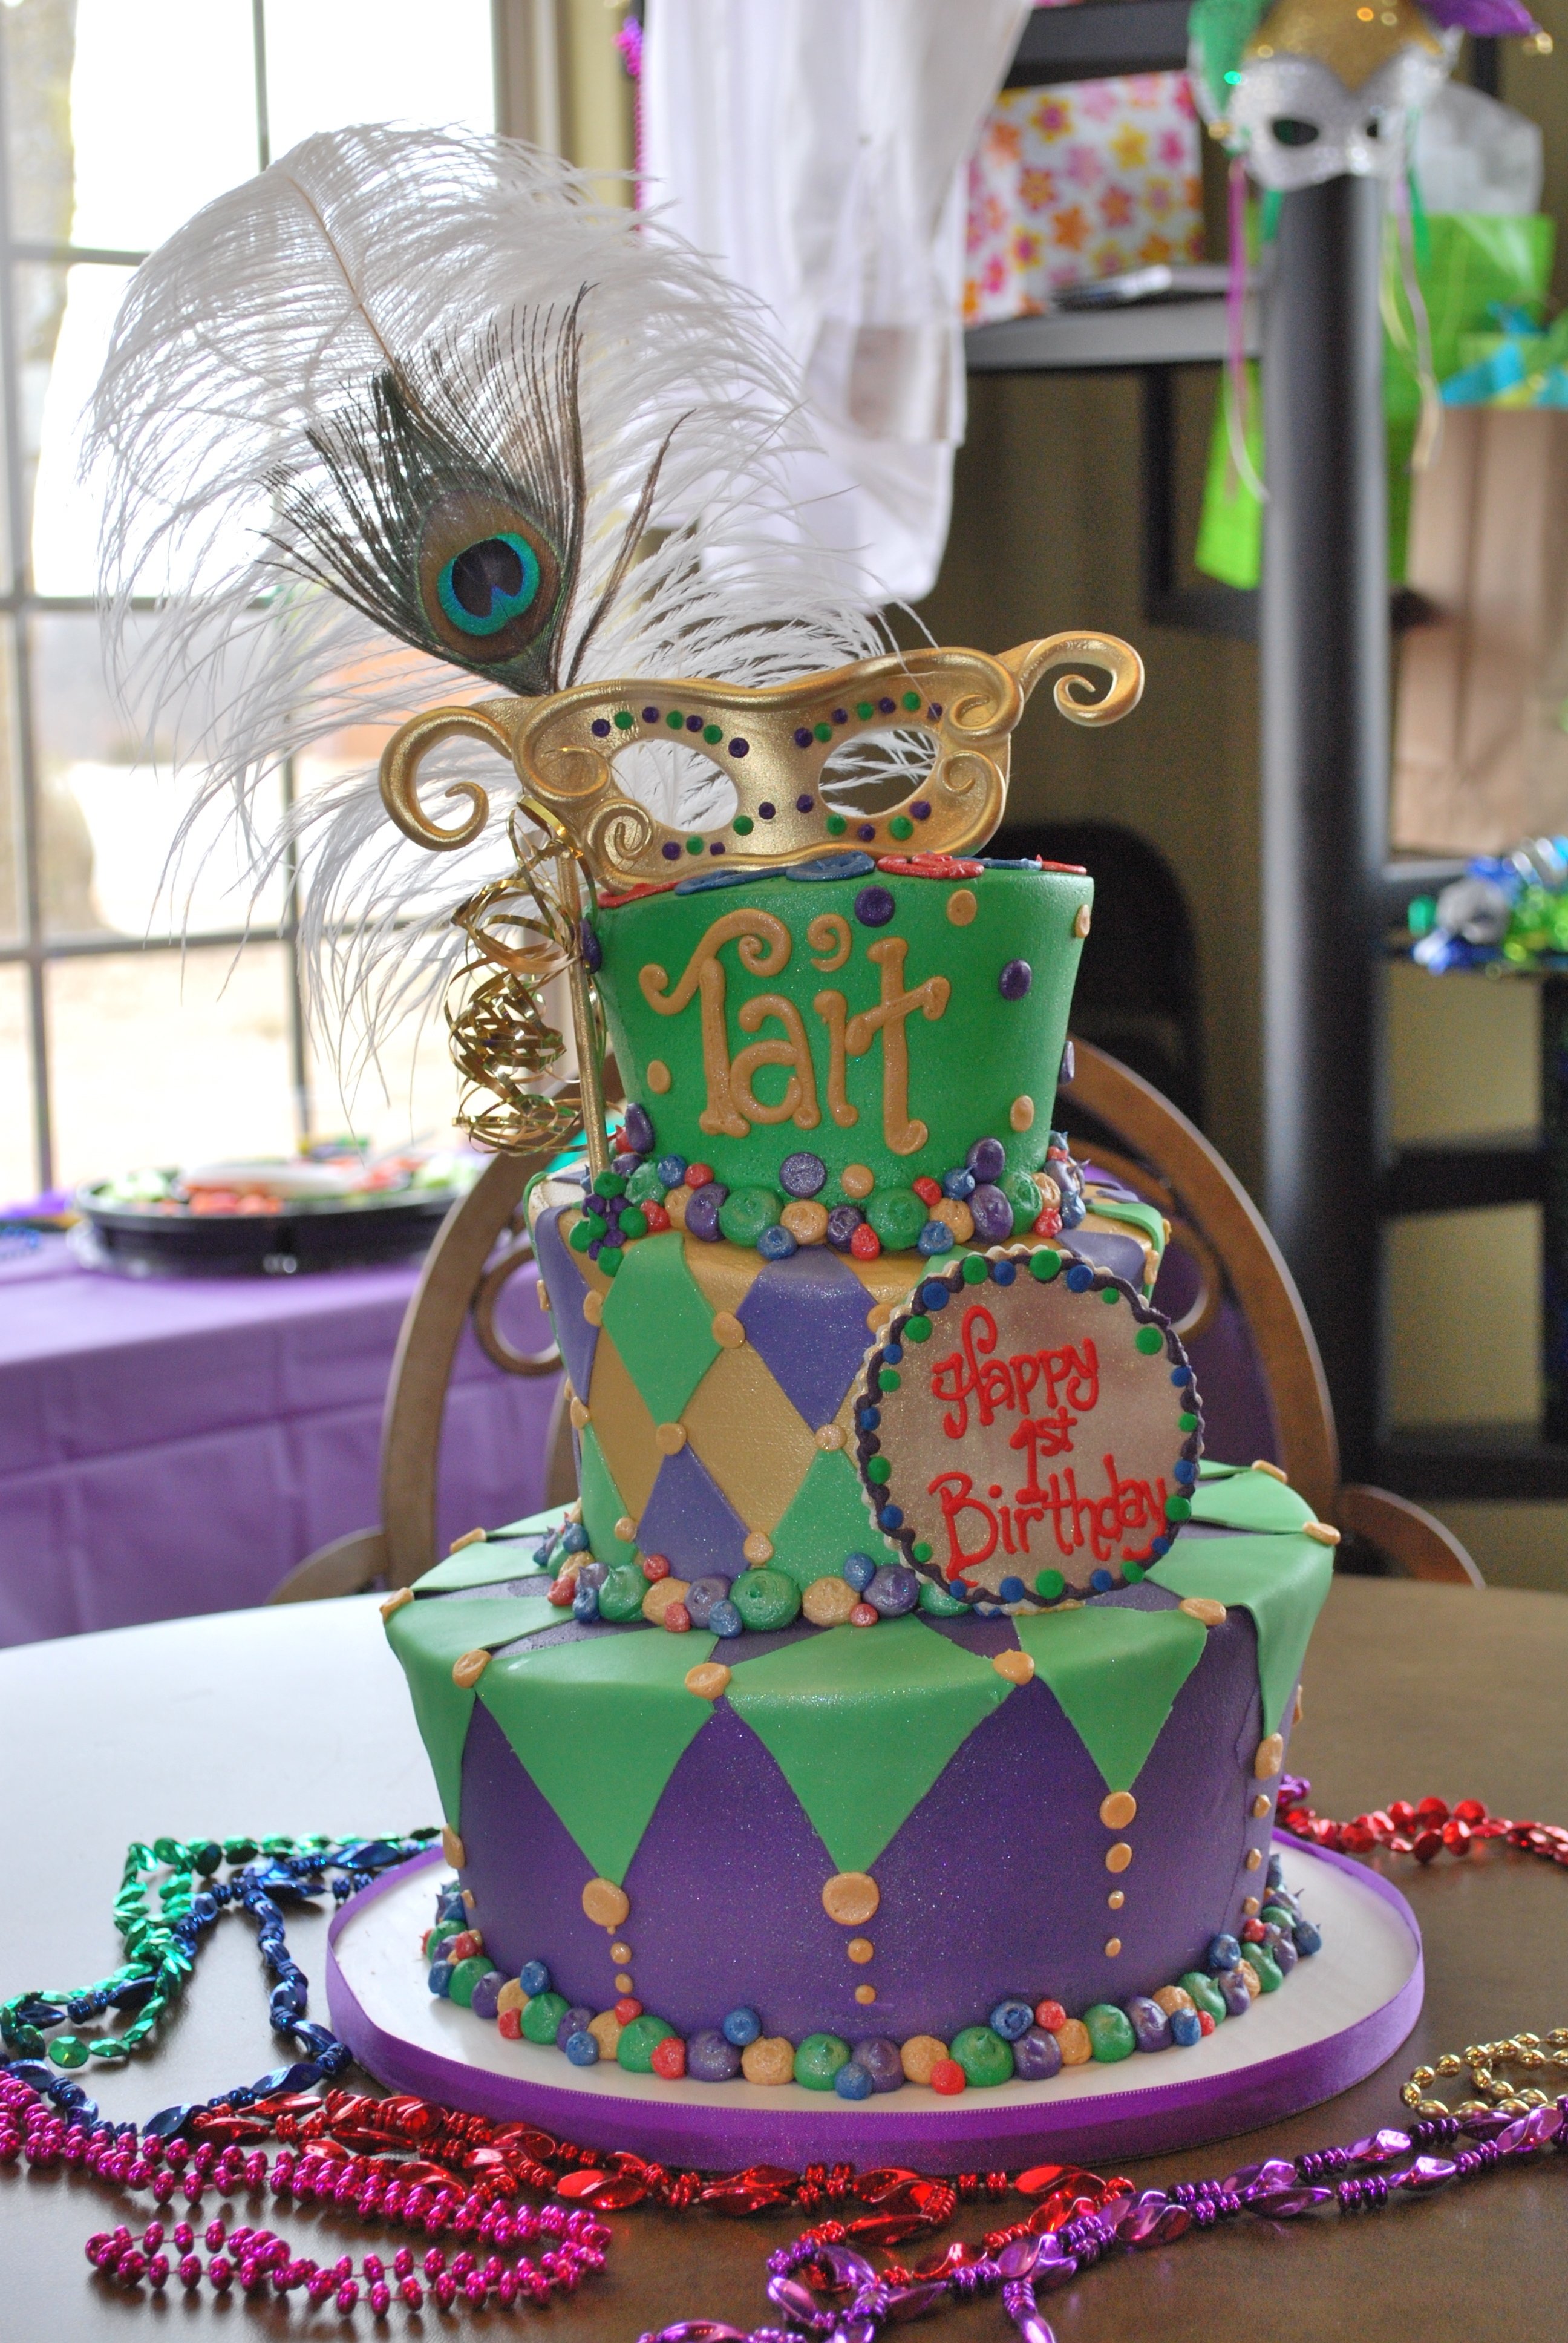 10 Pretty Mardi Gras Theme Party Ideas first birthday cake mardi gras theme birthday party ideas 1 2022